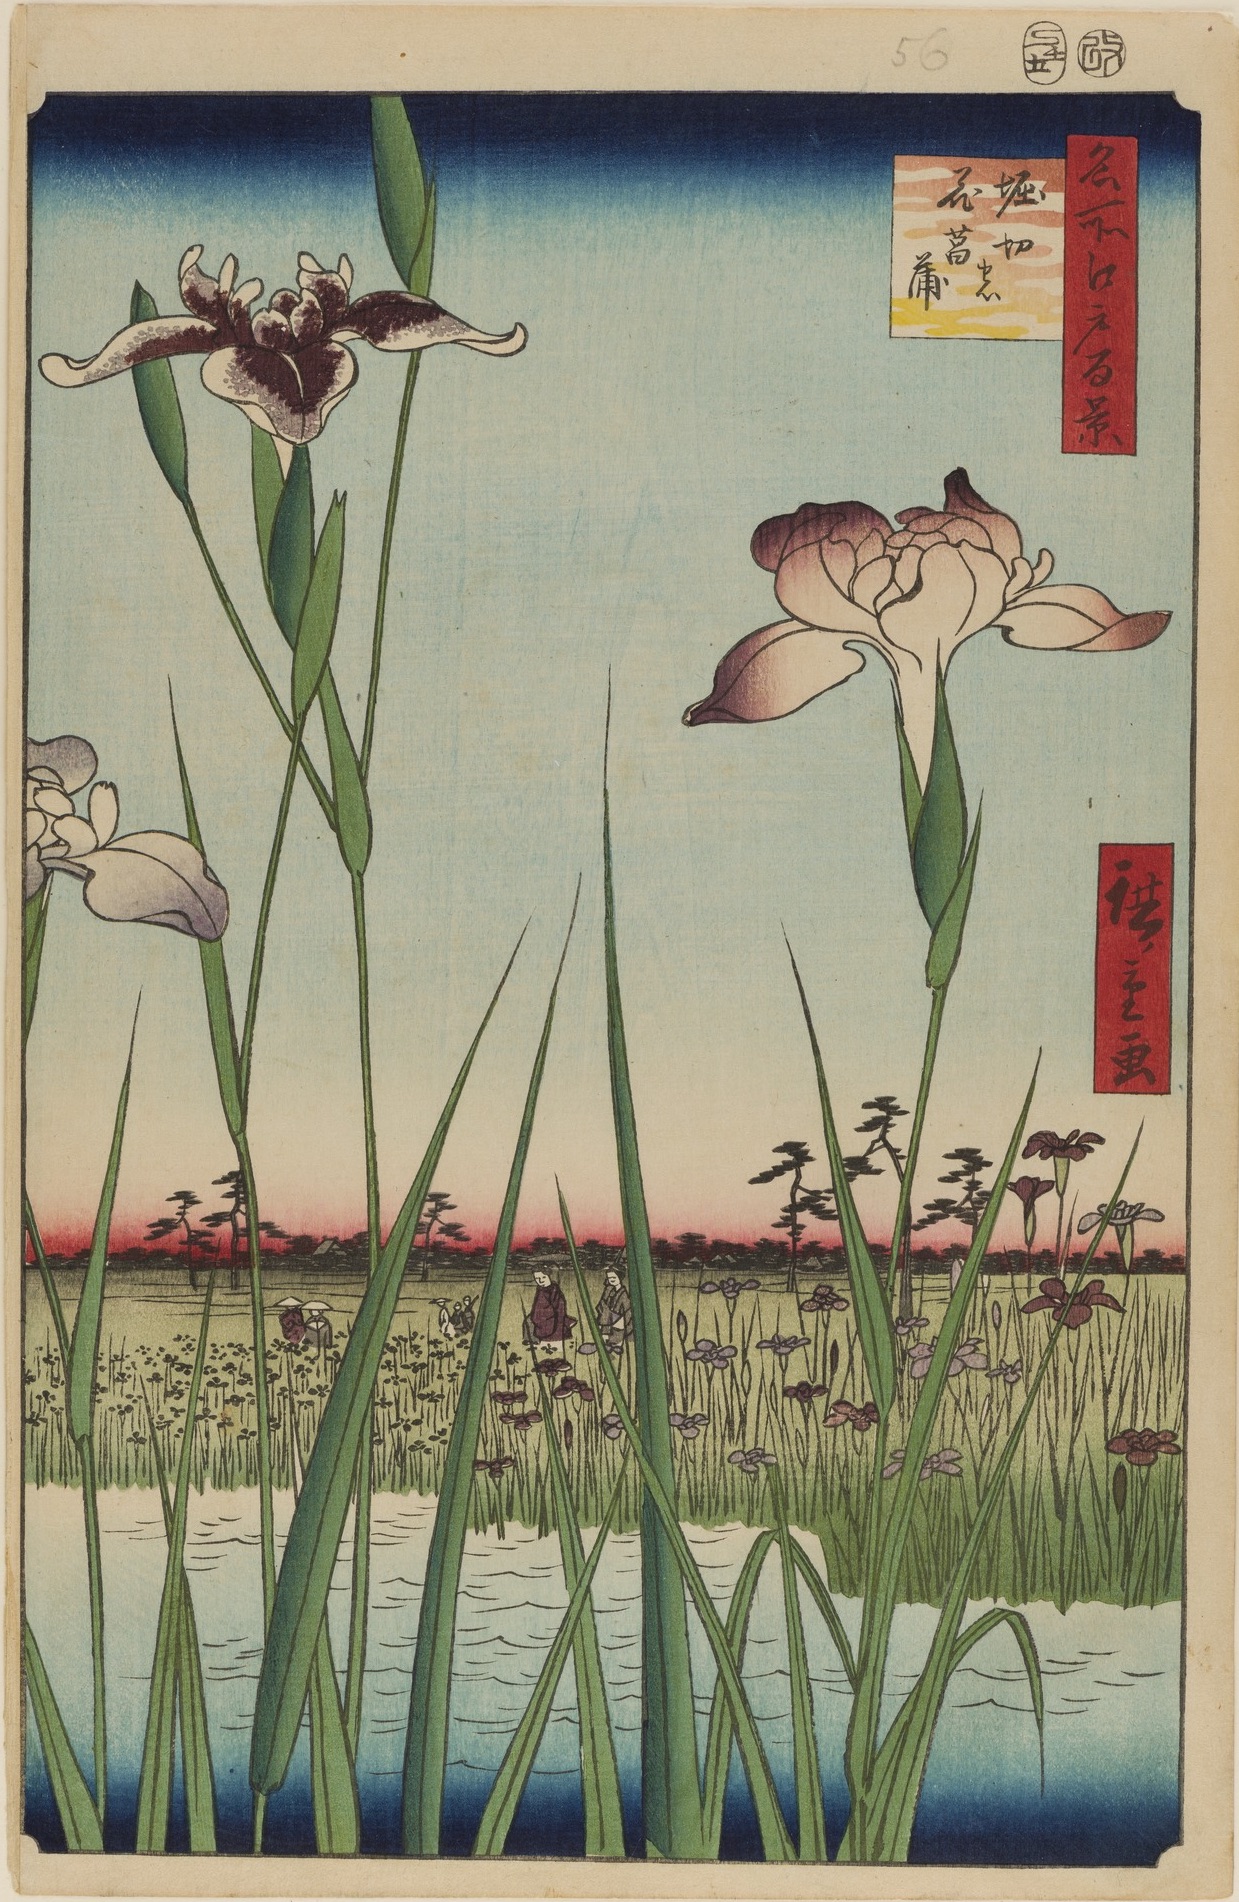 Horikiri İris Bahçesi (orig. "Horikiri Iris Garden") by  Hiroshige - 1856 - 34 x 22.9 cm 